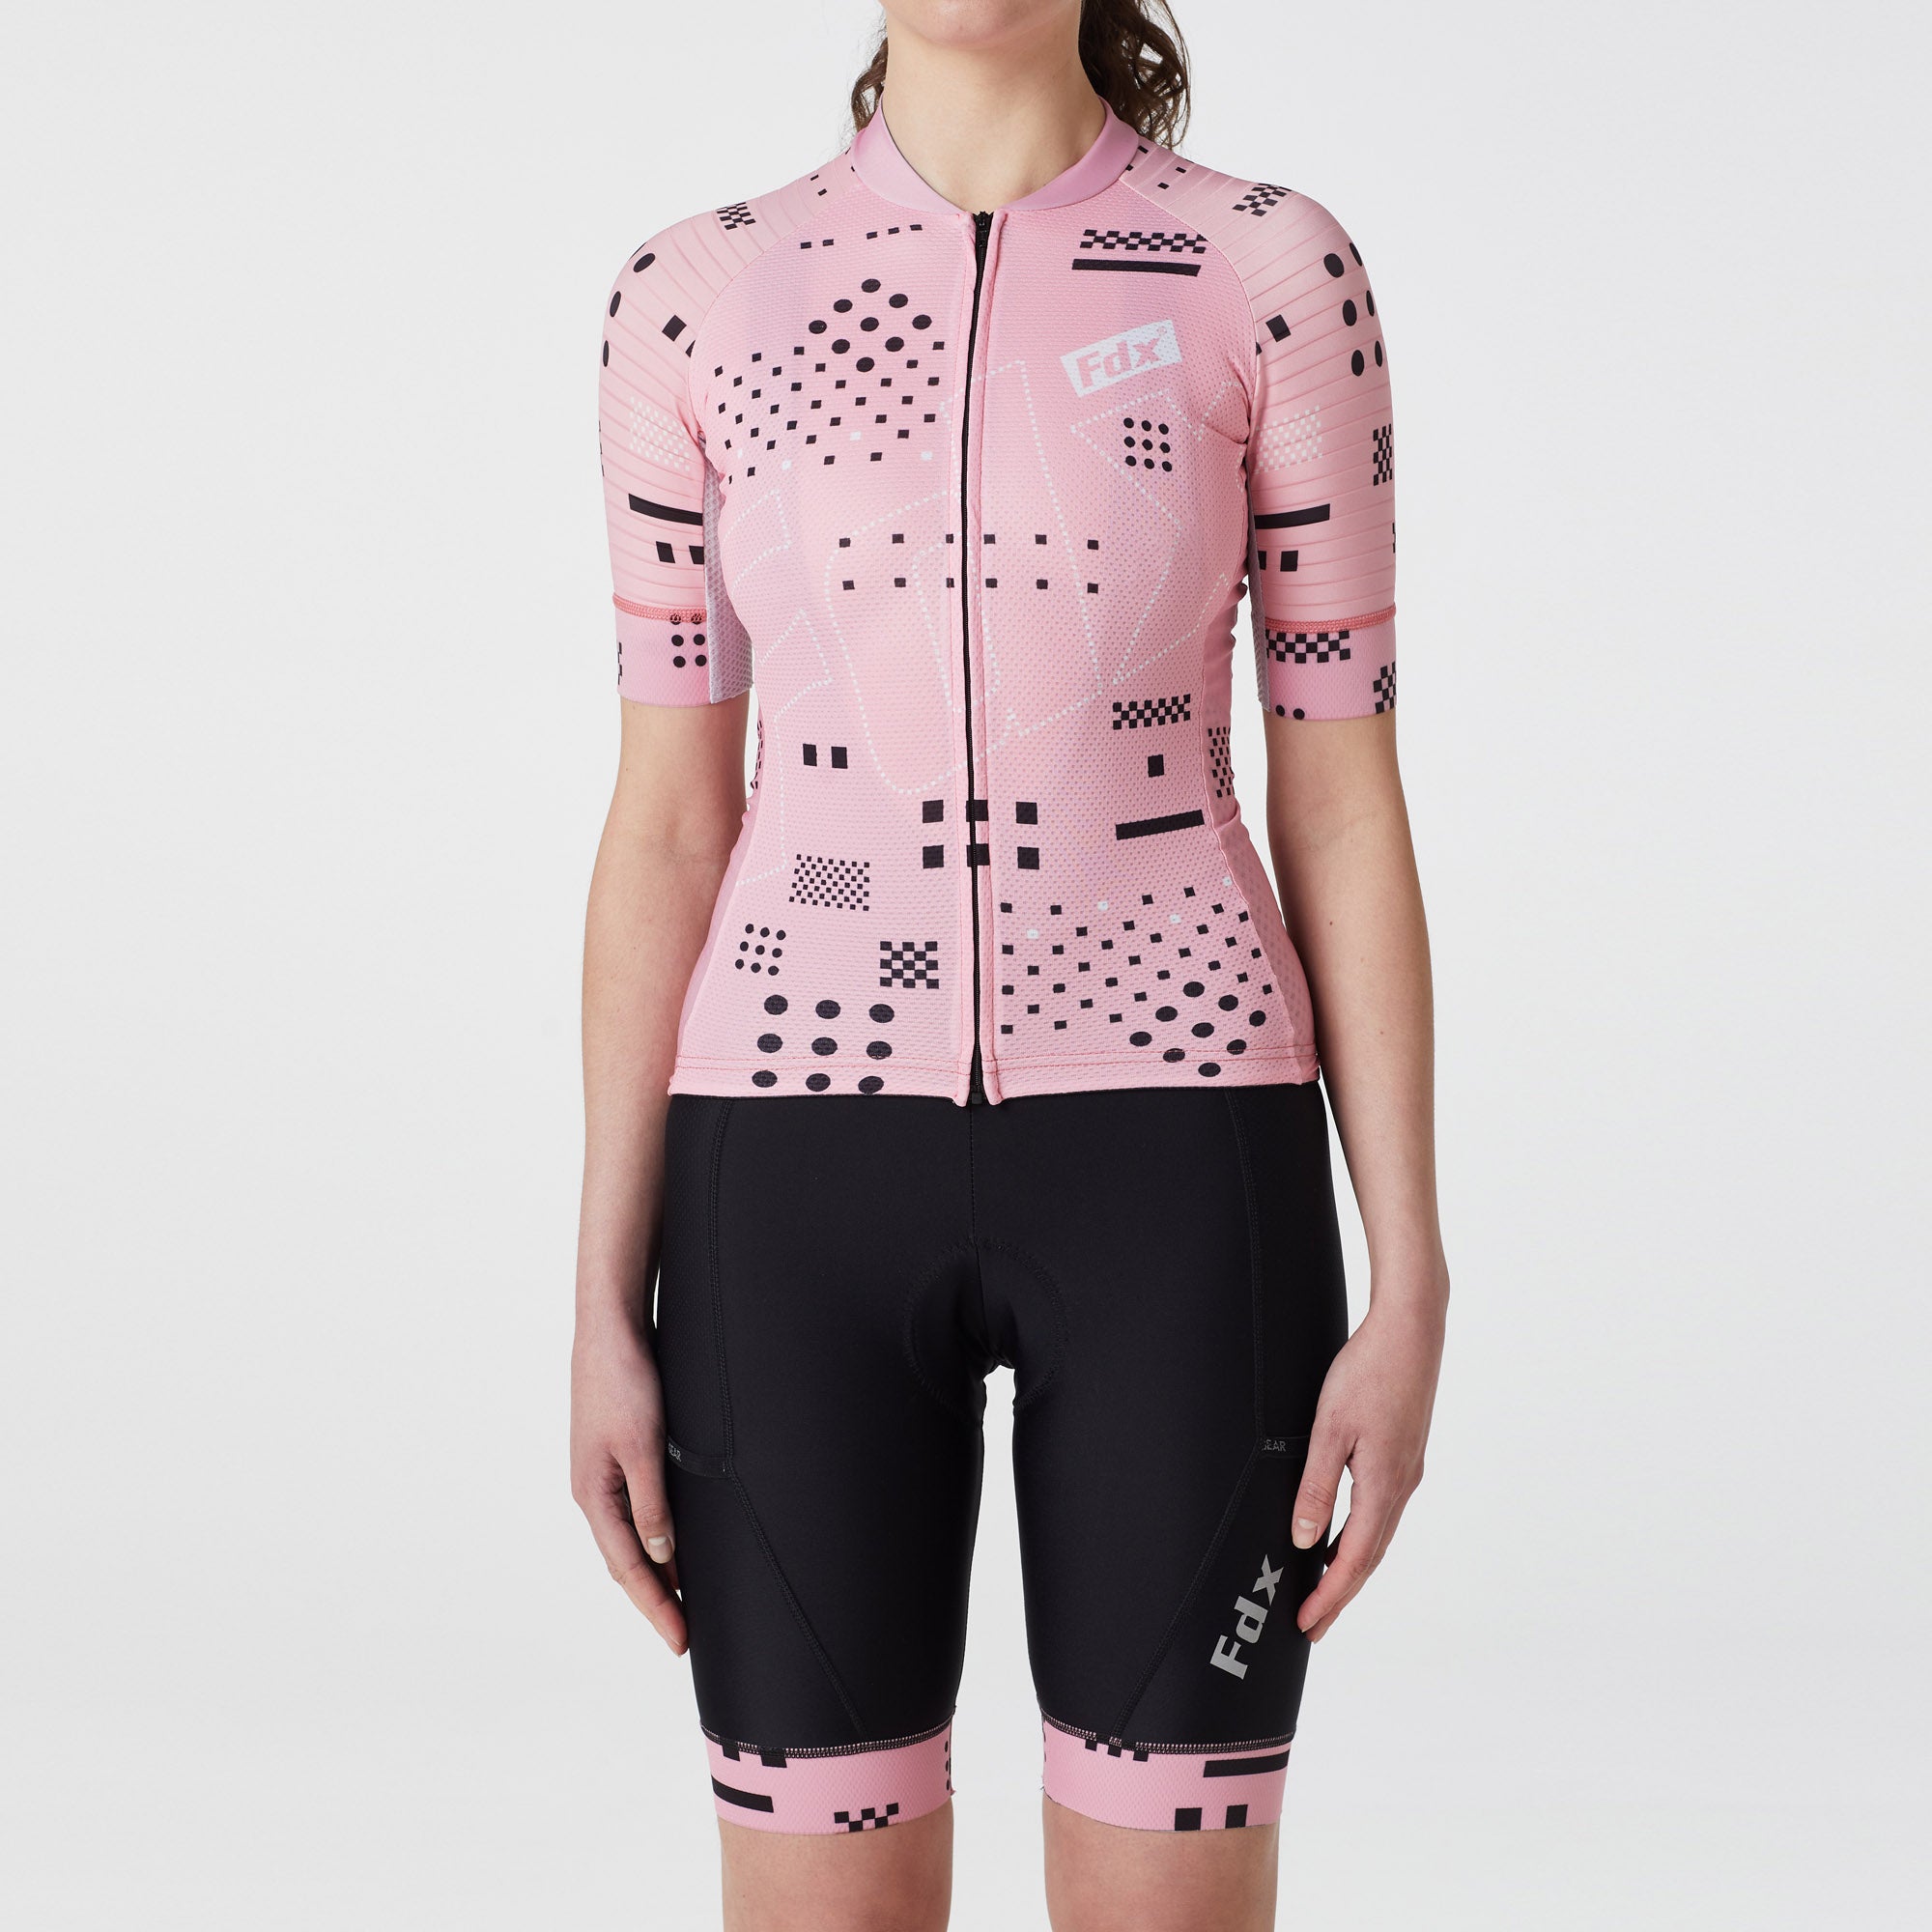 Fdx Womens Tea Pink Short Sleeve Cycling Jersey & Gel Padded Bib Shorts Best Summer Road Bike Wear Light Weight, Hi-viz Reflectors & Pockets - All Day